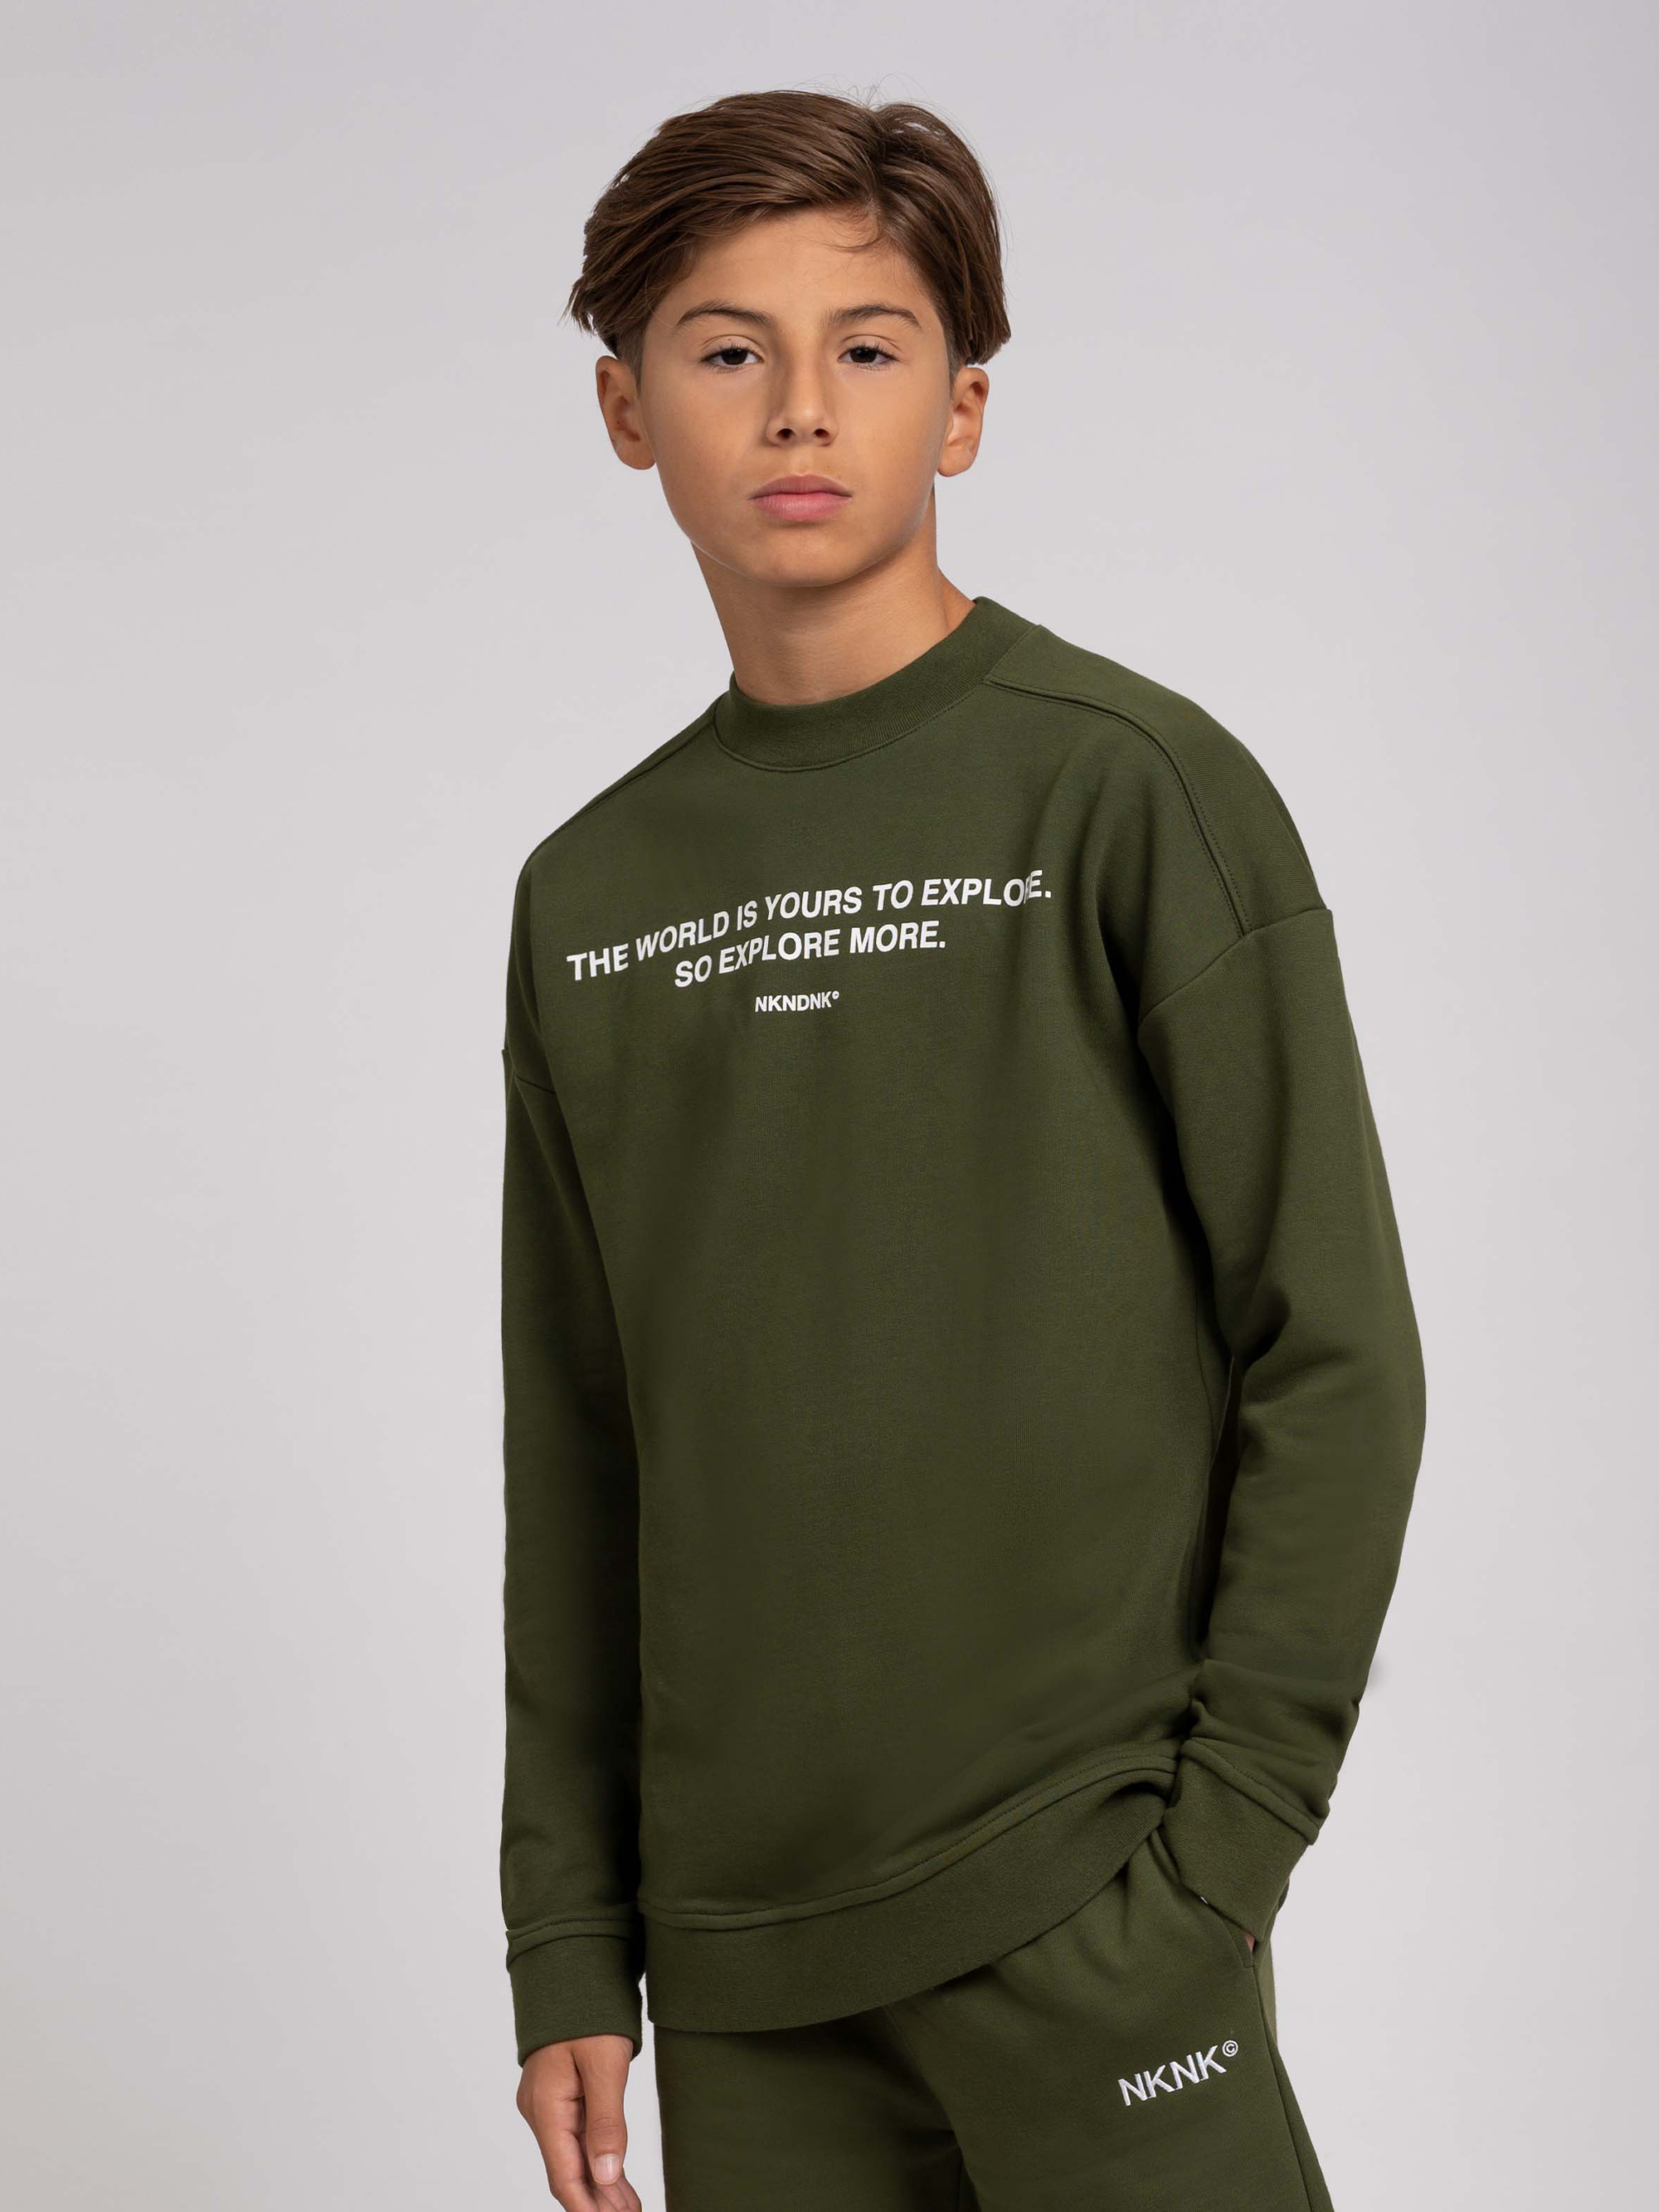 Sweatshirt with quote